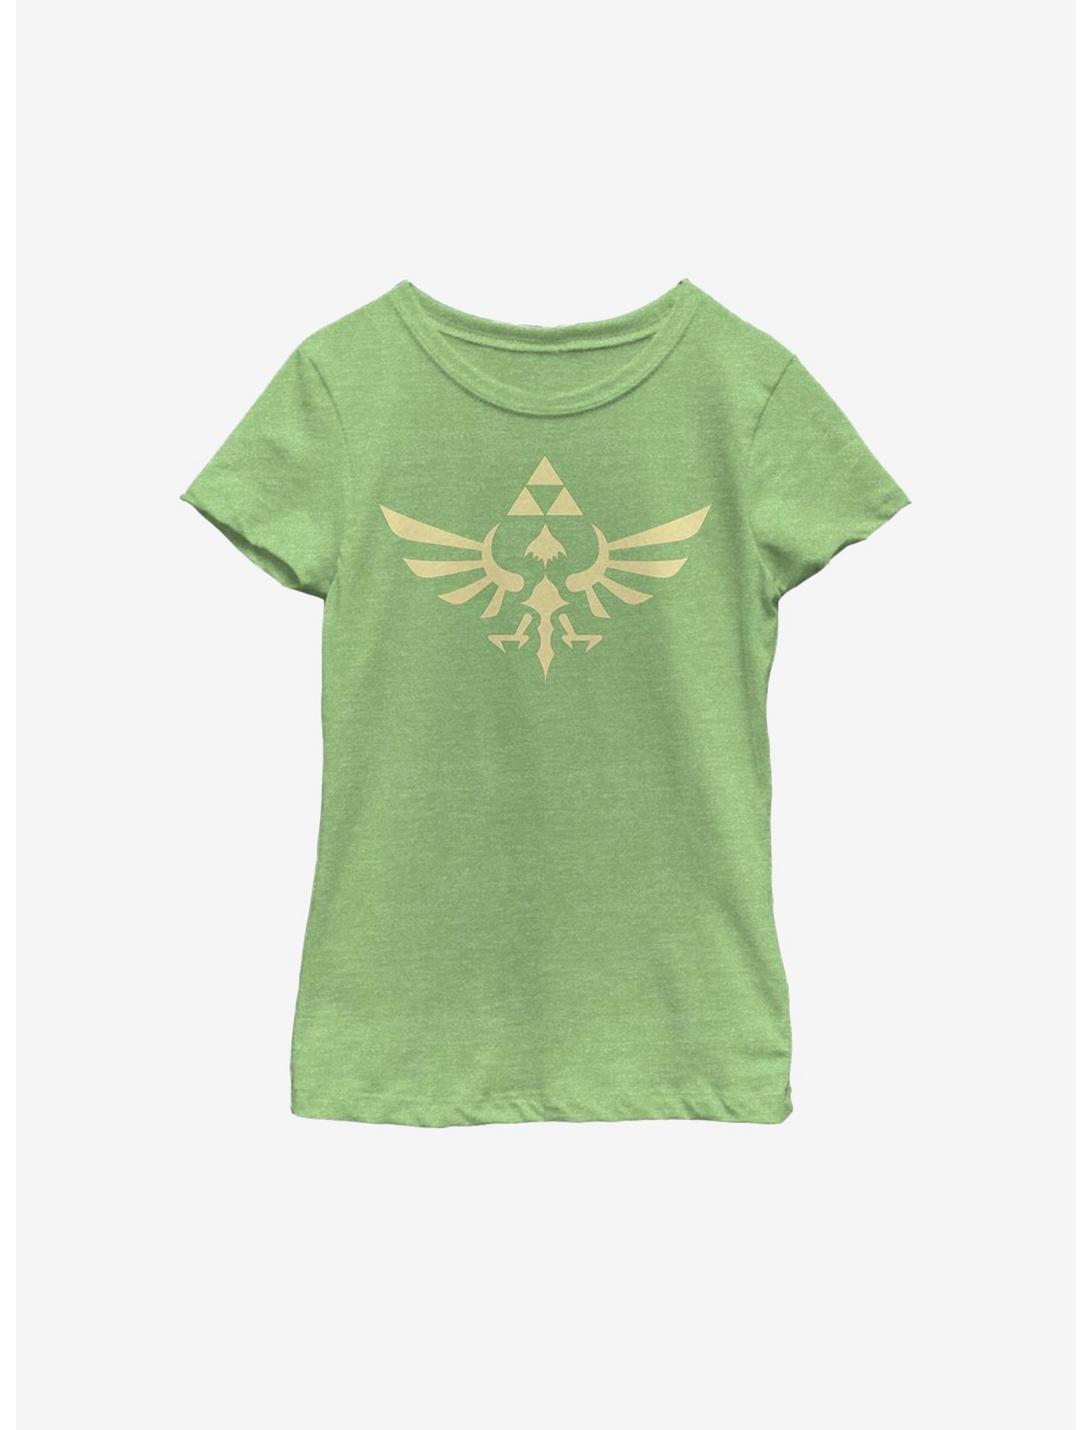 Nintendo The Legend Of Zelda Triumphant Triforce Youth T-Shirt, , hi-res